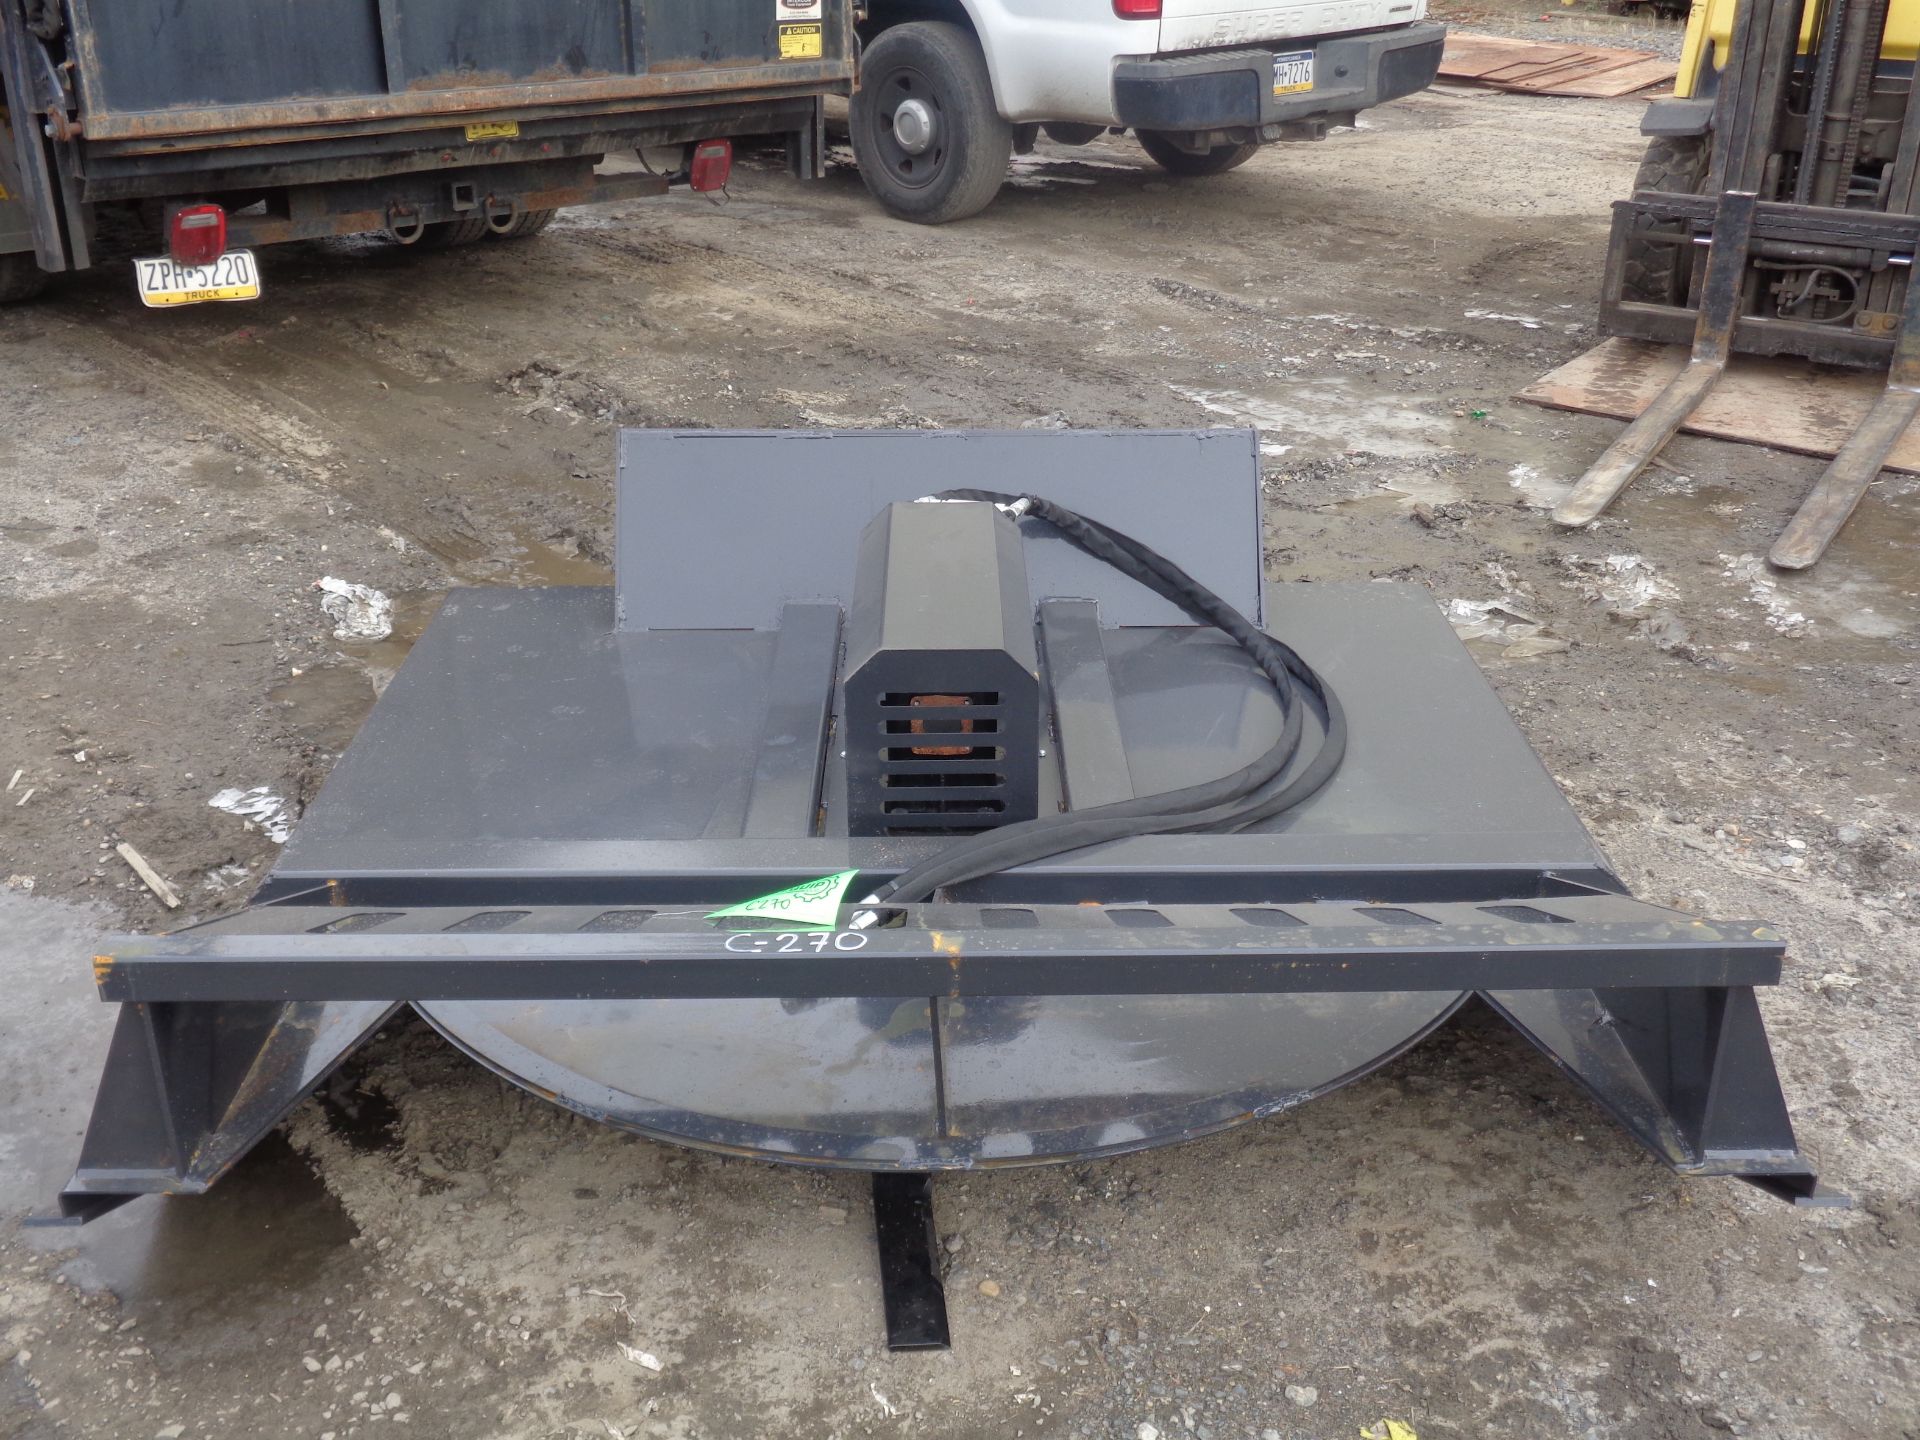 New Wolverine Skid Steer Mower Deck (C270E)